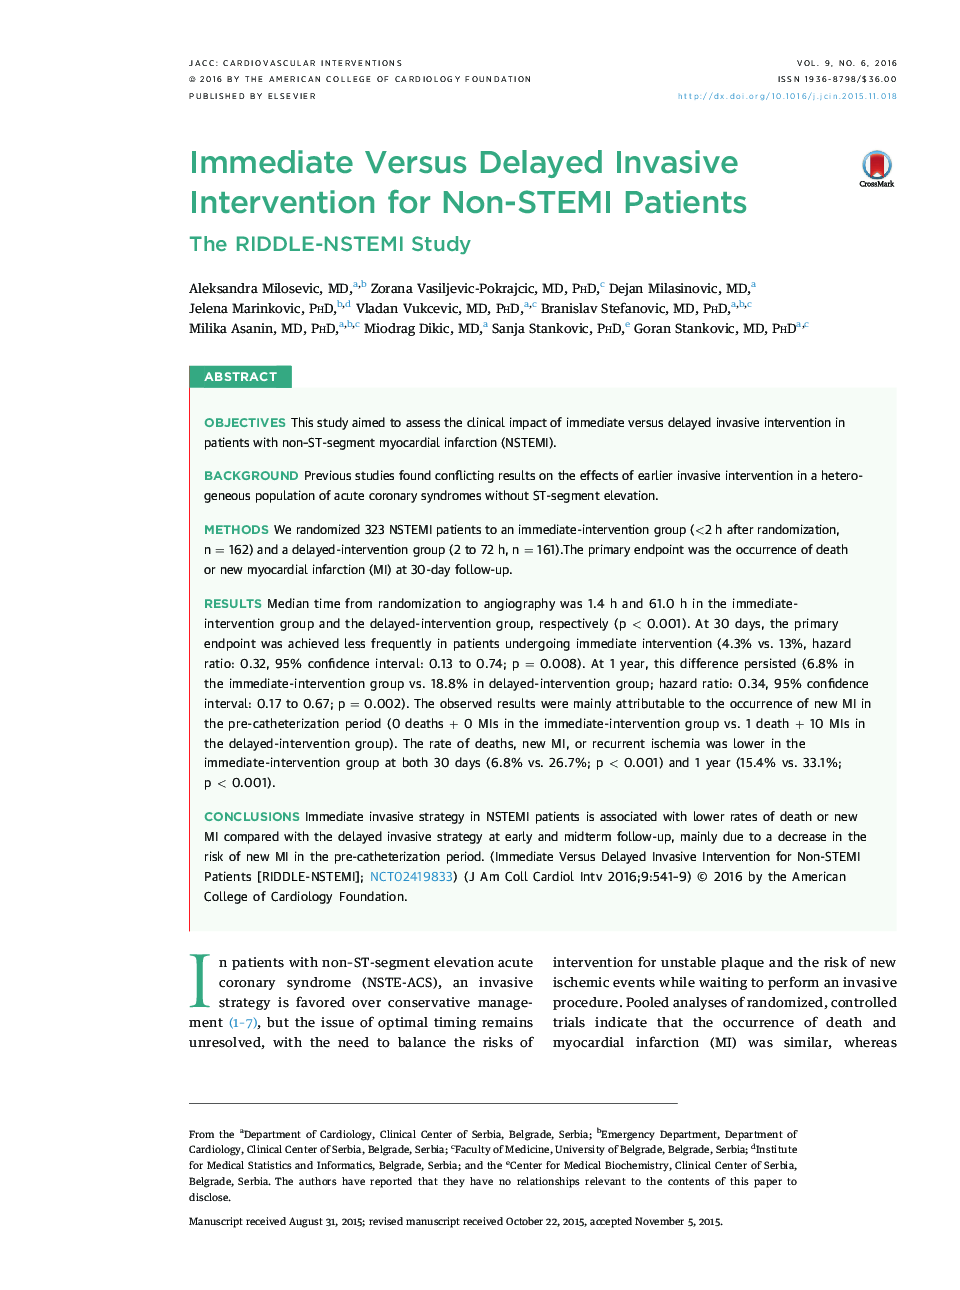 Immediate Versus Delayed Invasive Intervention for Non-STEMI Patients : The RIDDLE-NSTEMI Study